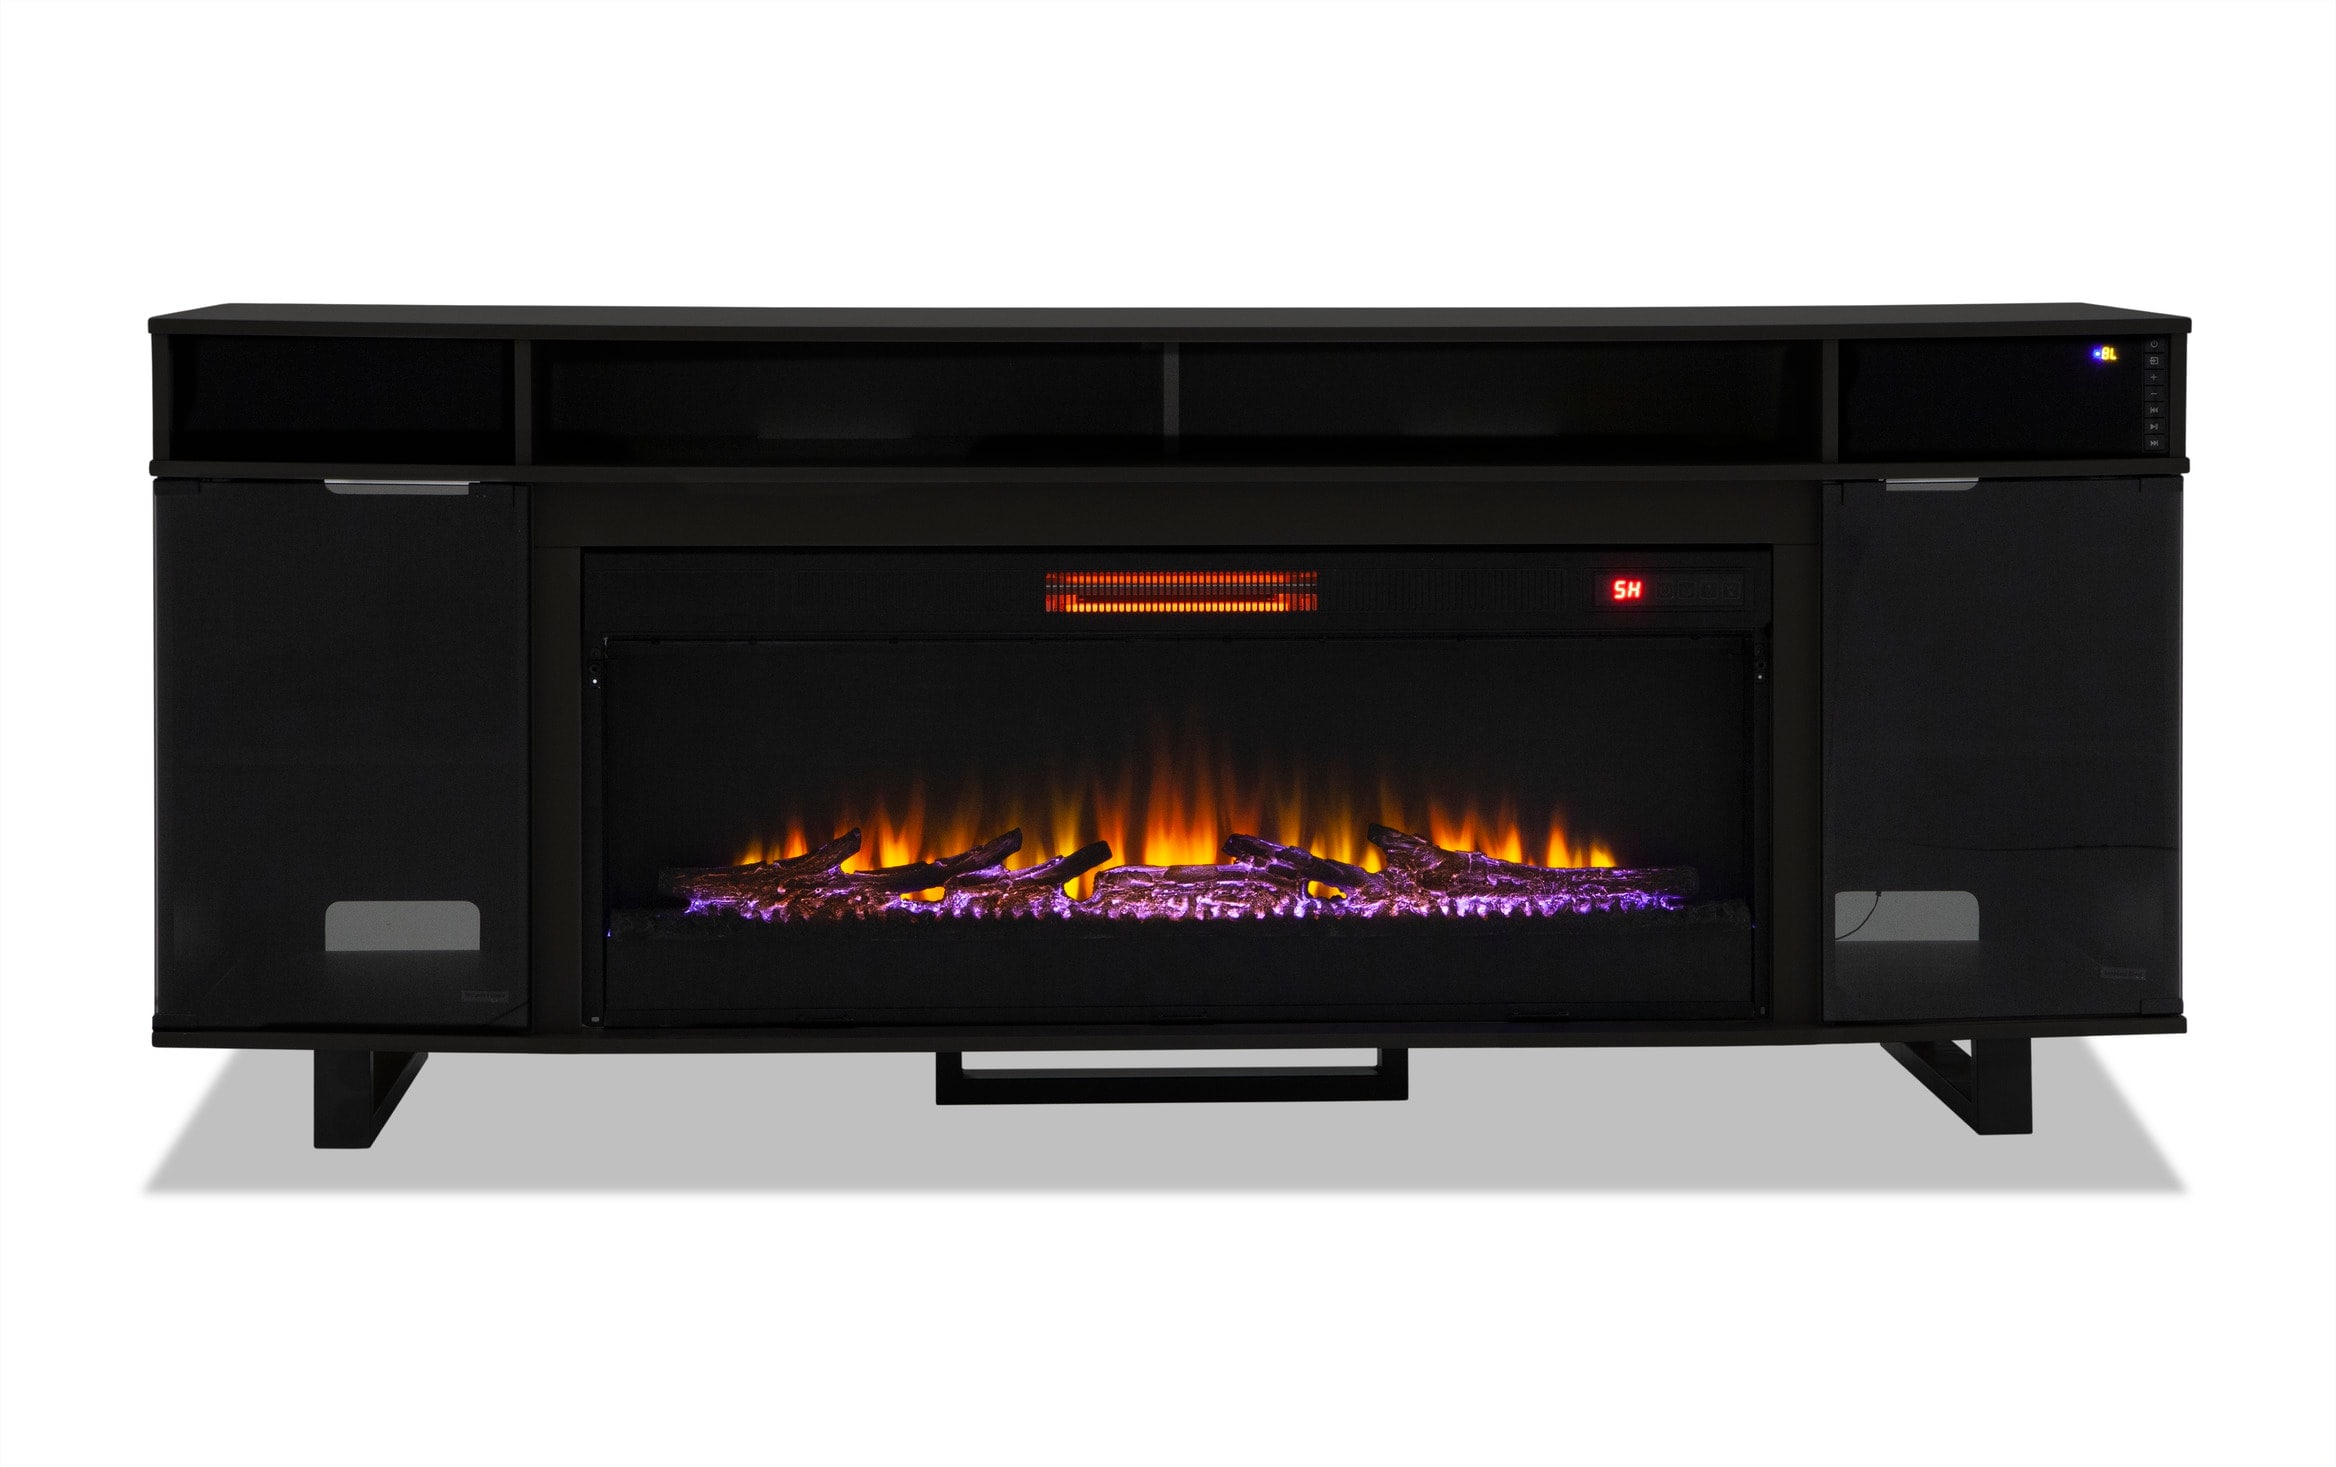 Blaze Black Fireplace Bob S, Bobs Furniture Tv Stand With Fireplace